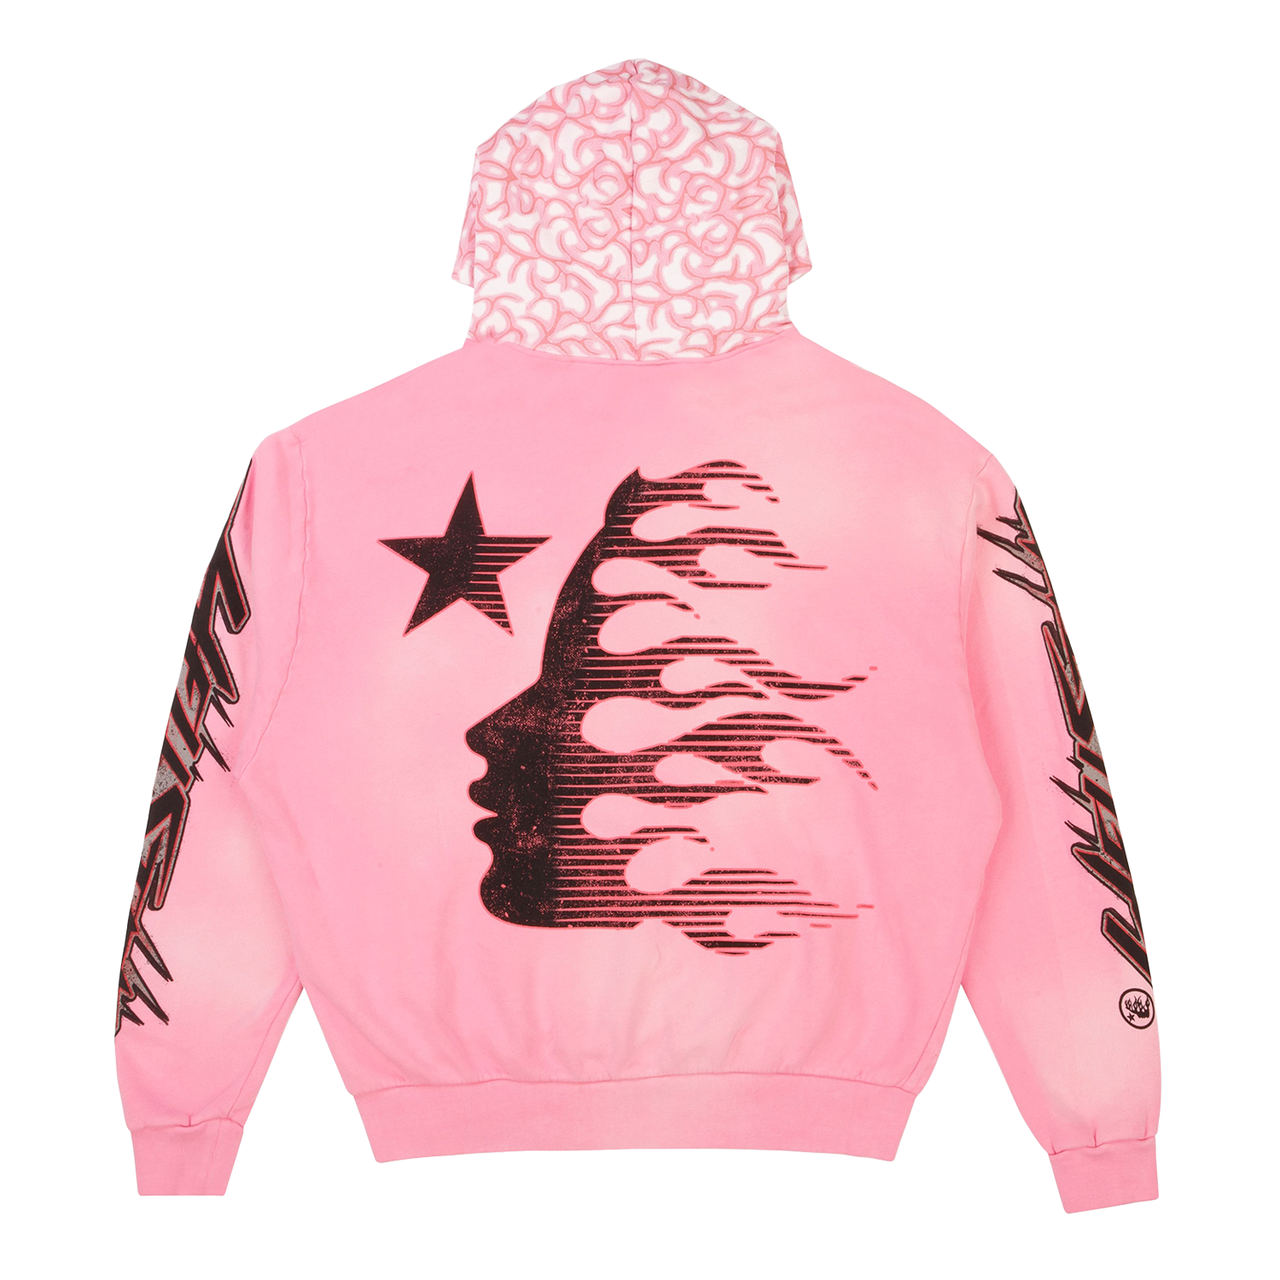 Hellstar Brainwashed With Brain Sweatshirt Pink